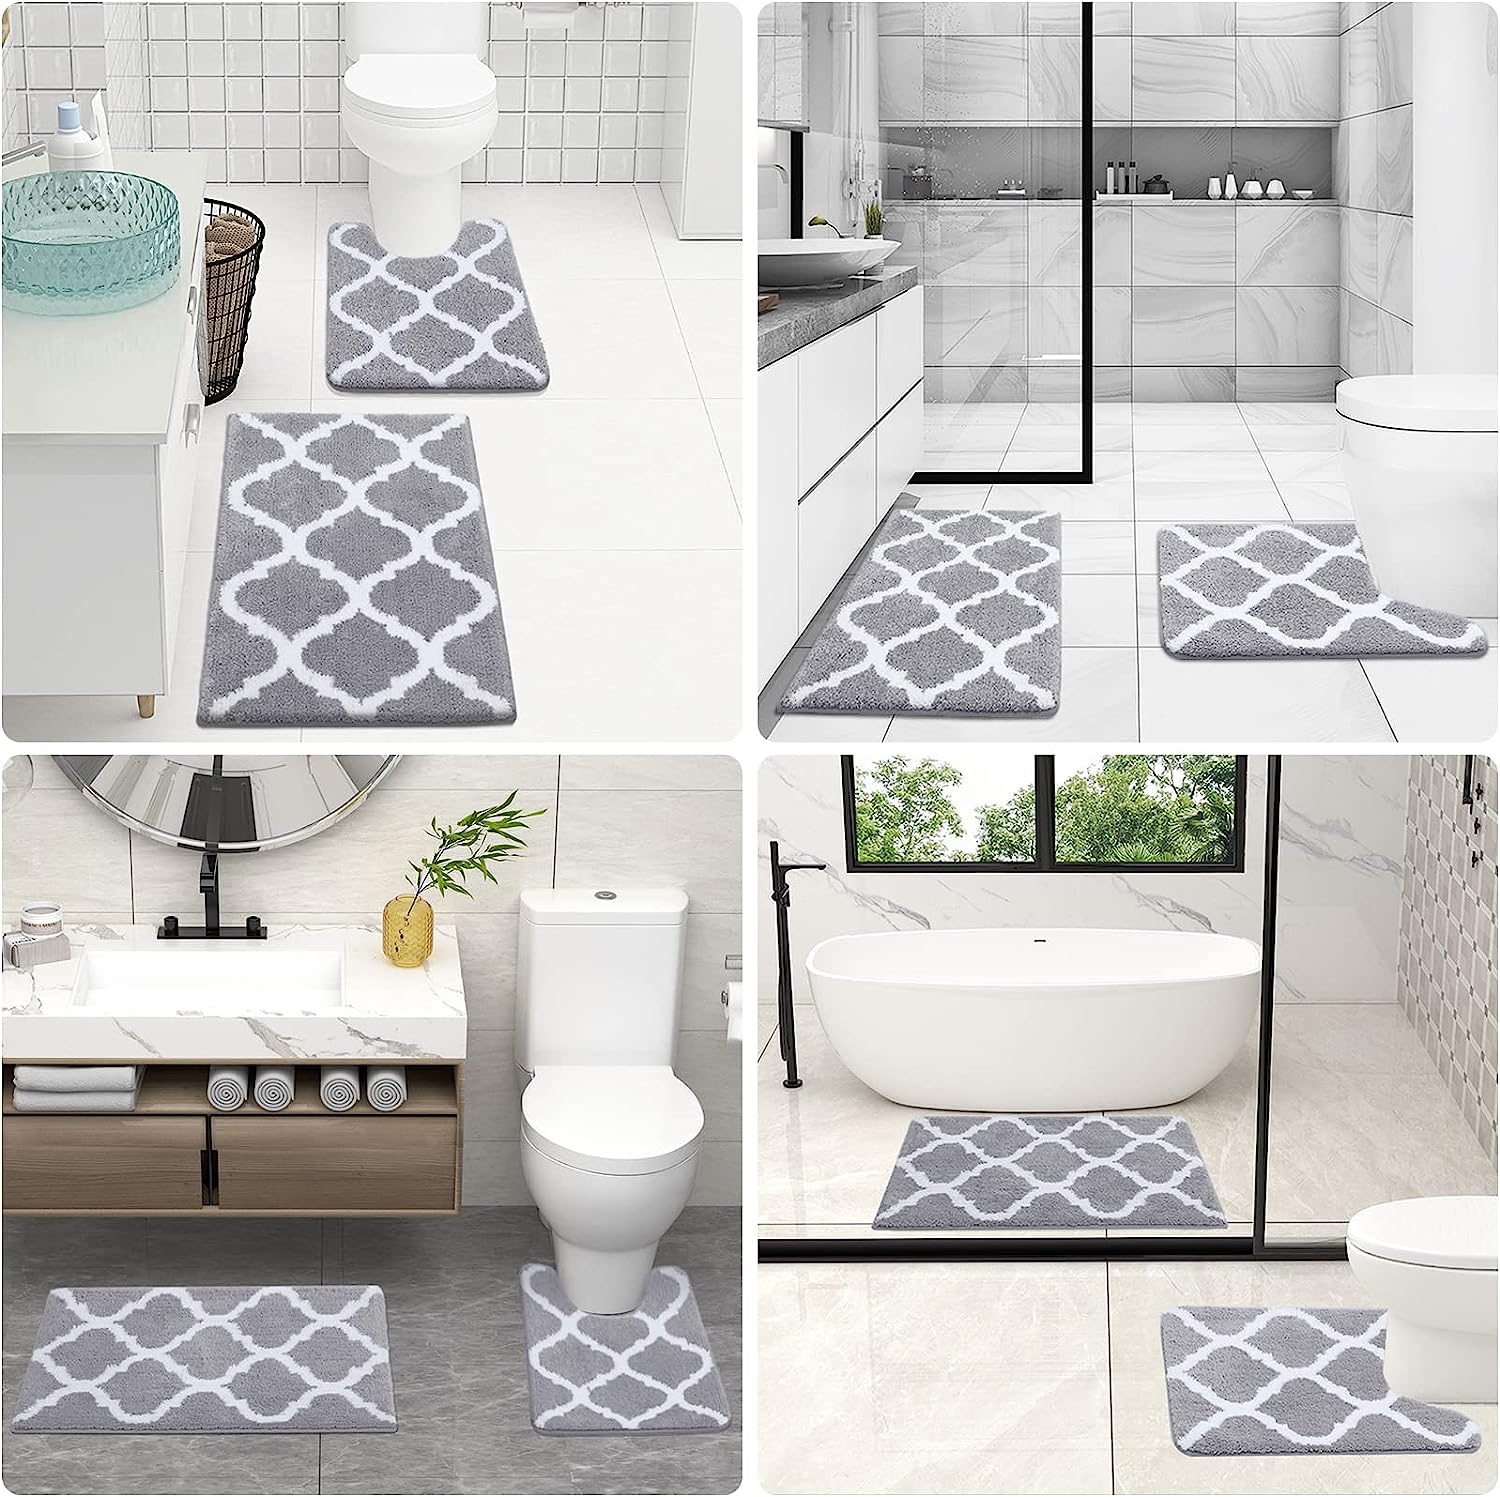 bathroom rugs sets